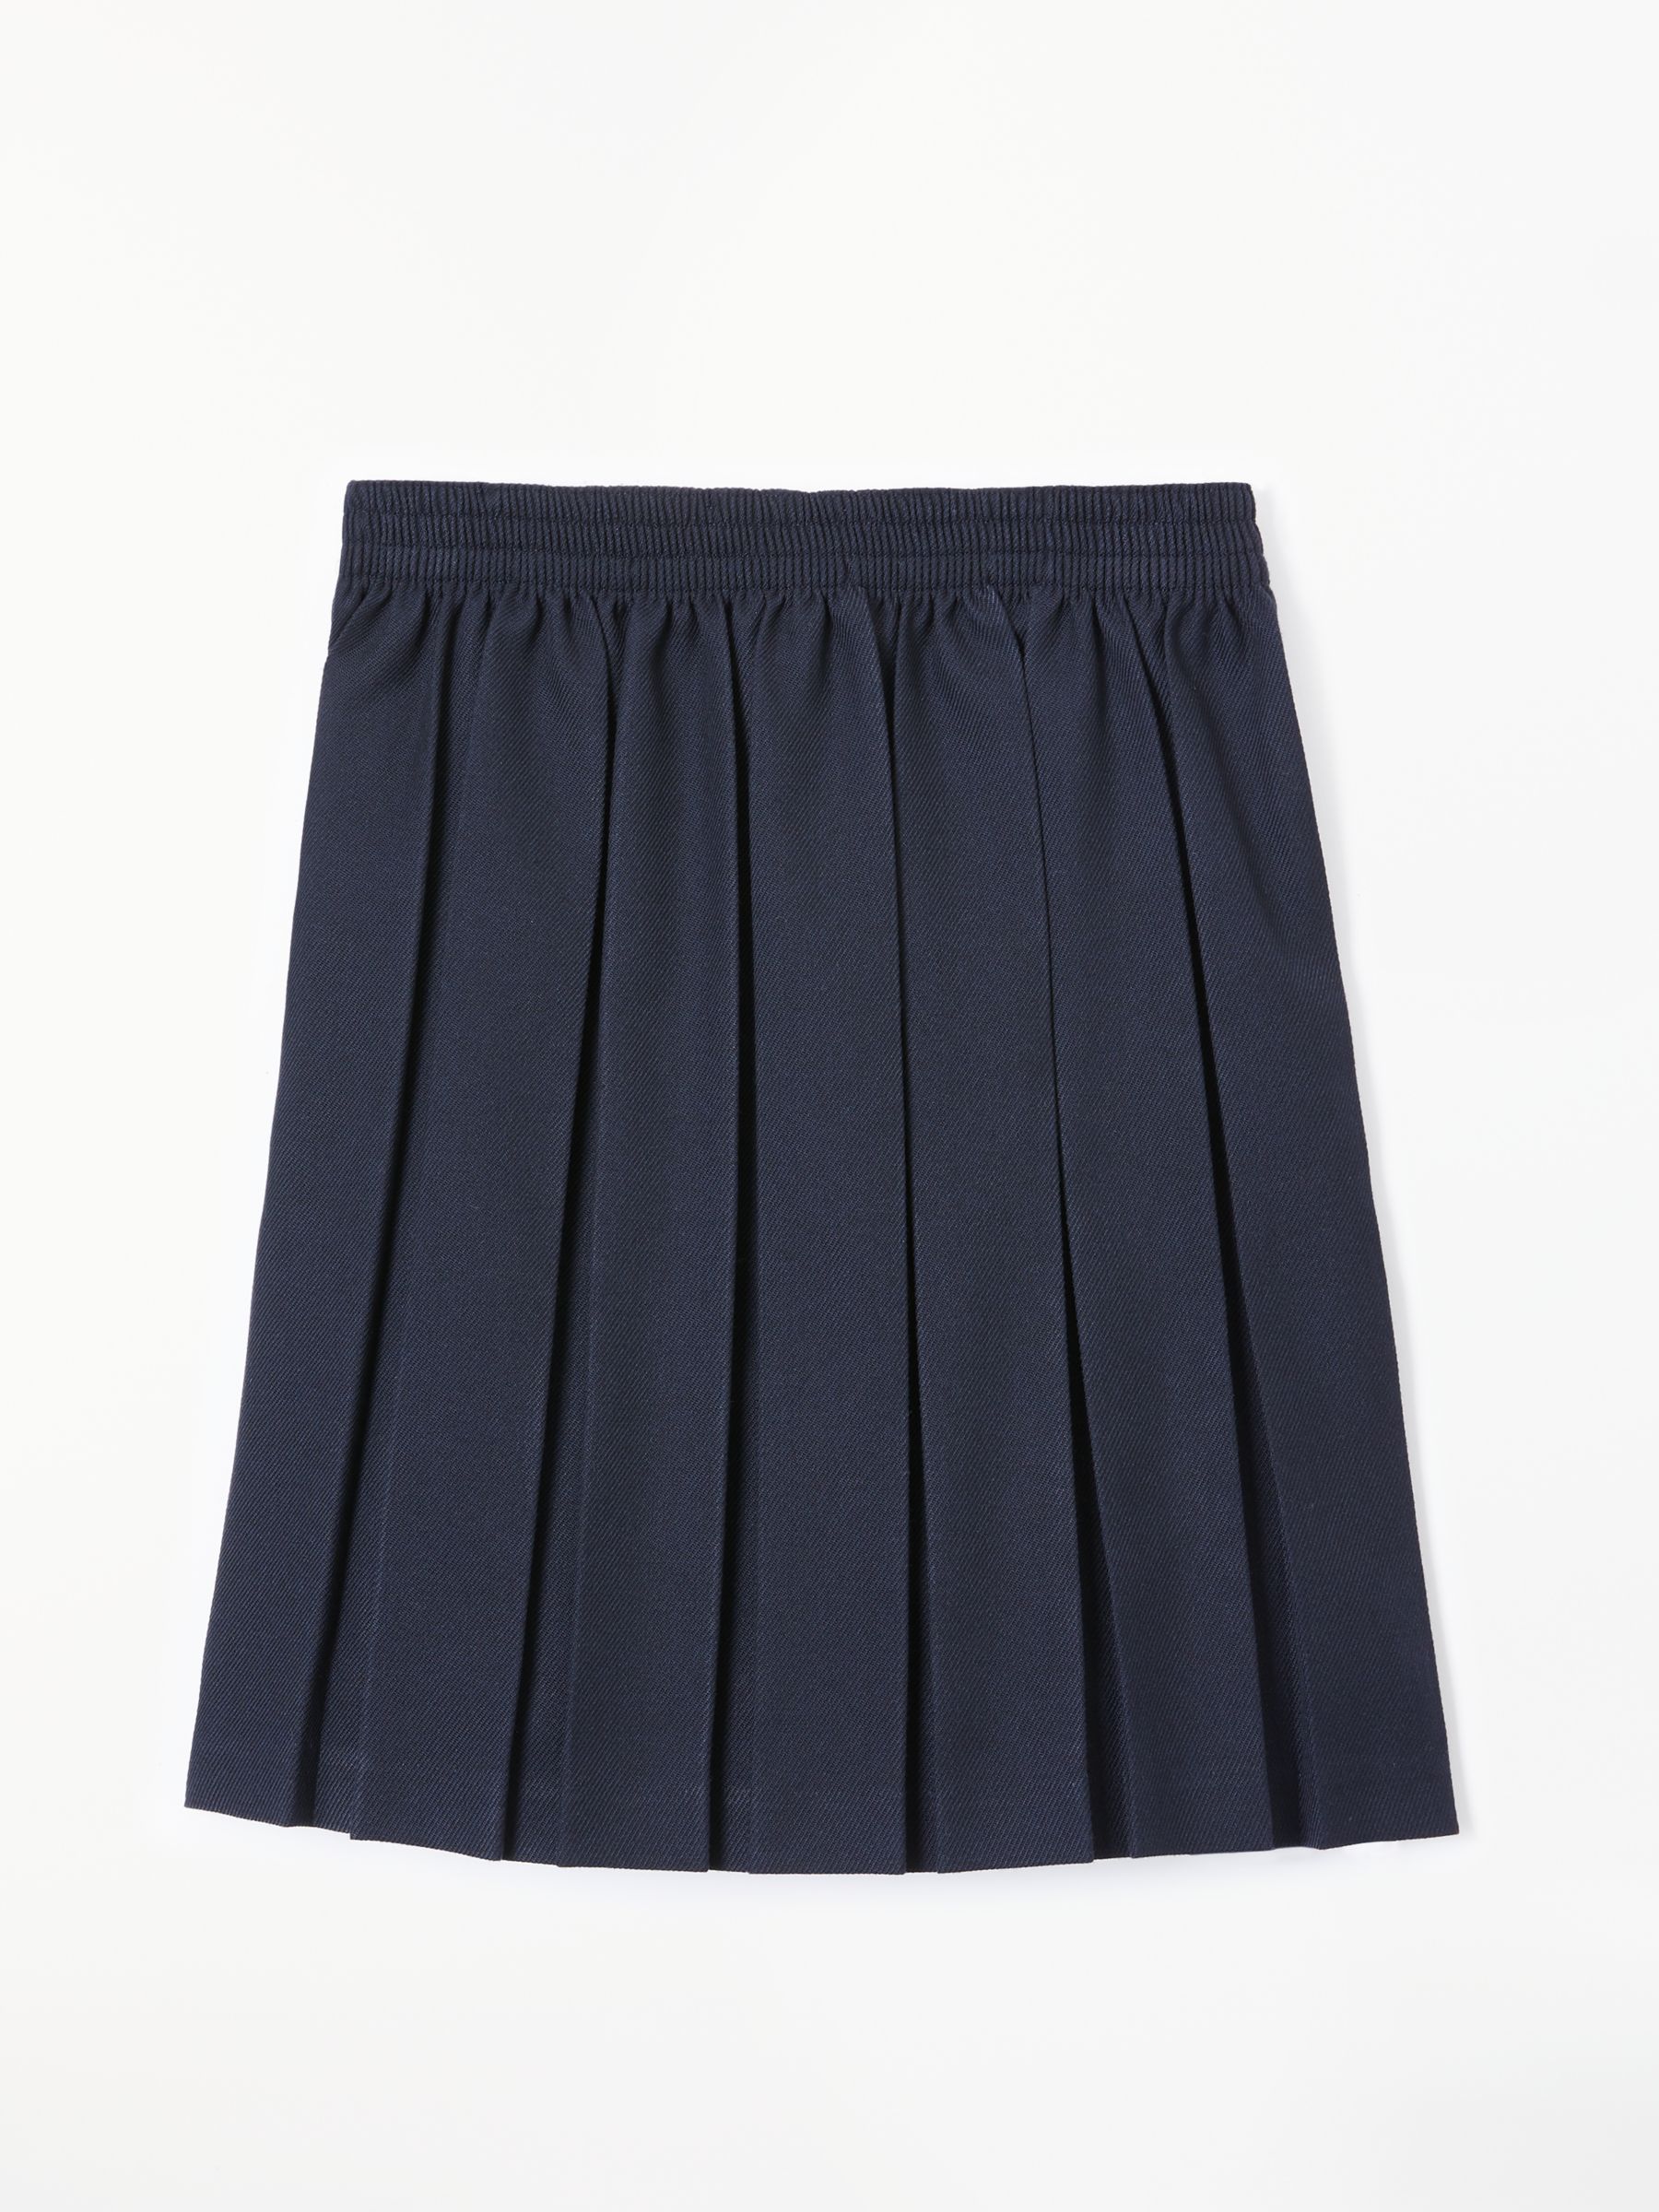 John Lewis Girls' Pleated School Skirt, Navy at John Lewis & Partners